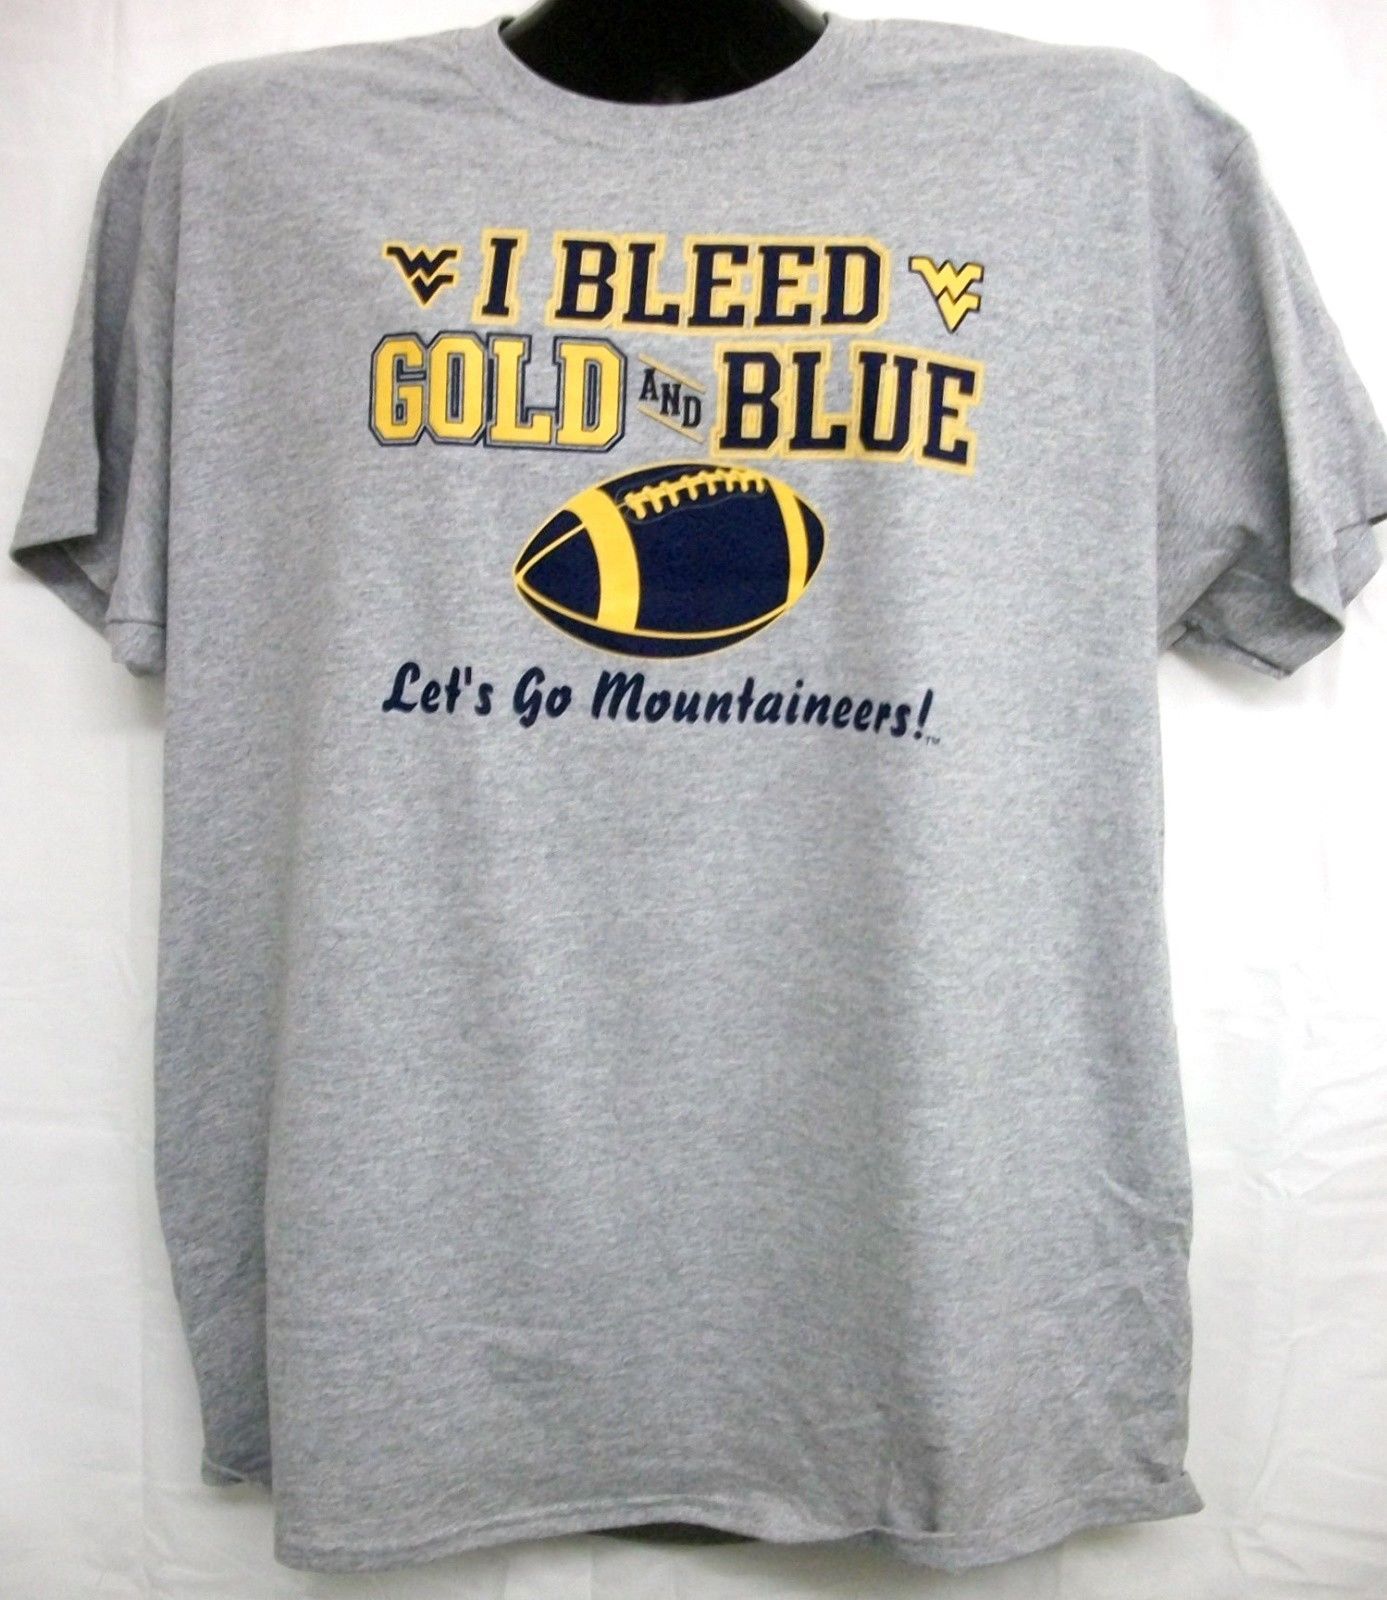 I Bleed Gold and Blue West Virginia Mountaineer's Shirt Medium - $16.83